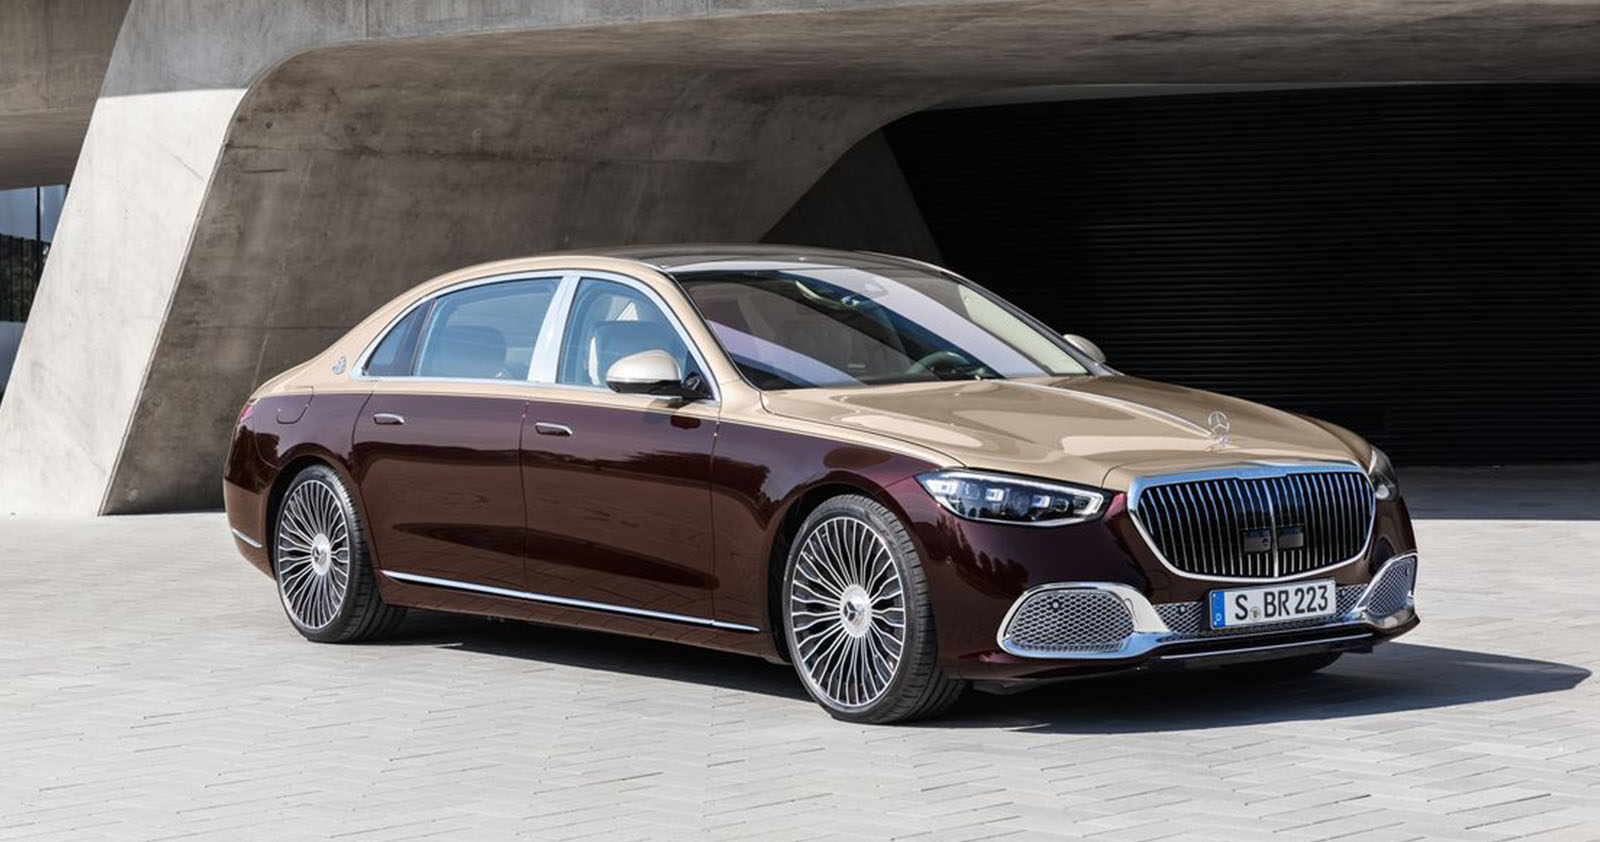 best new luxury cars 2022